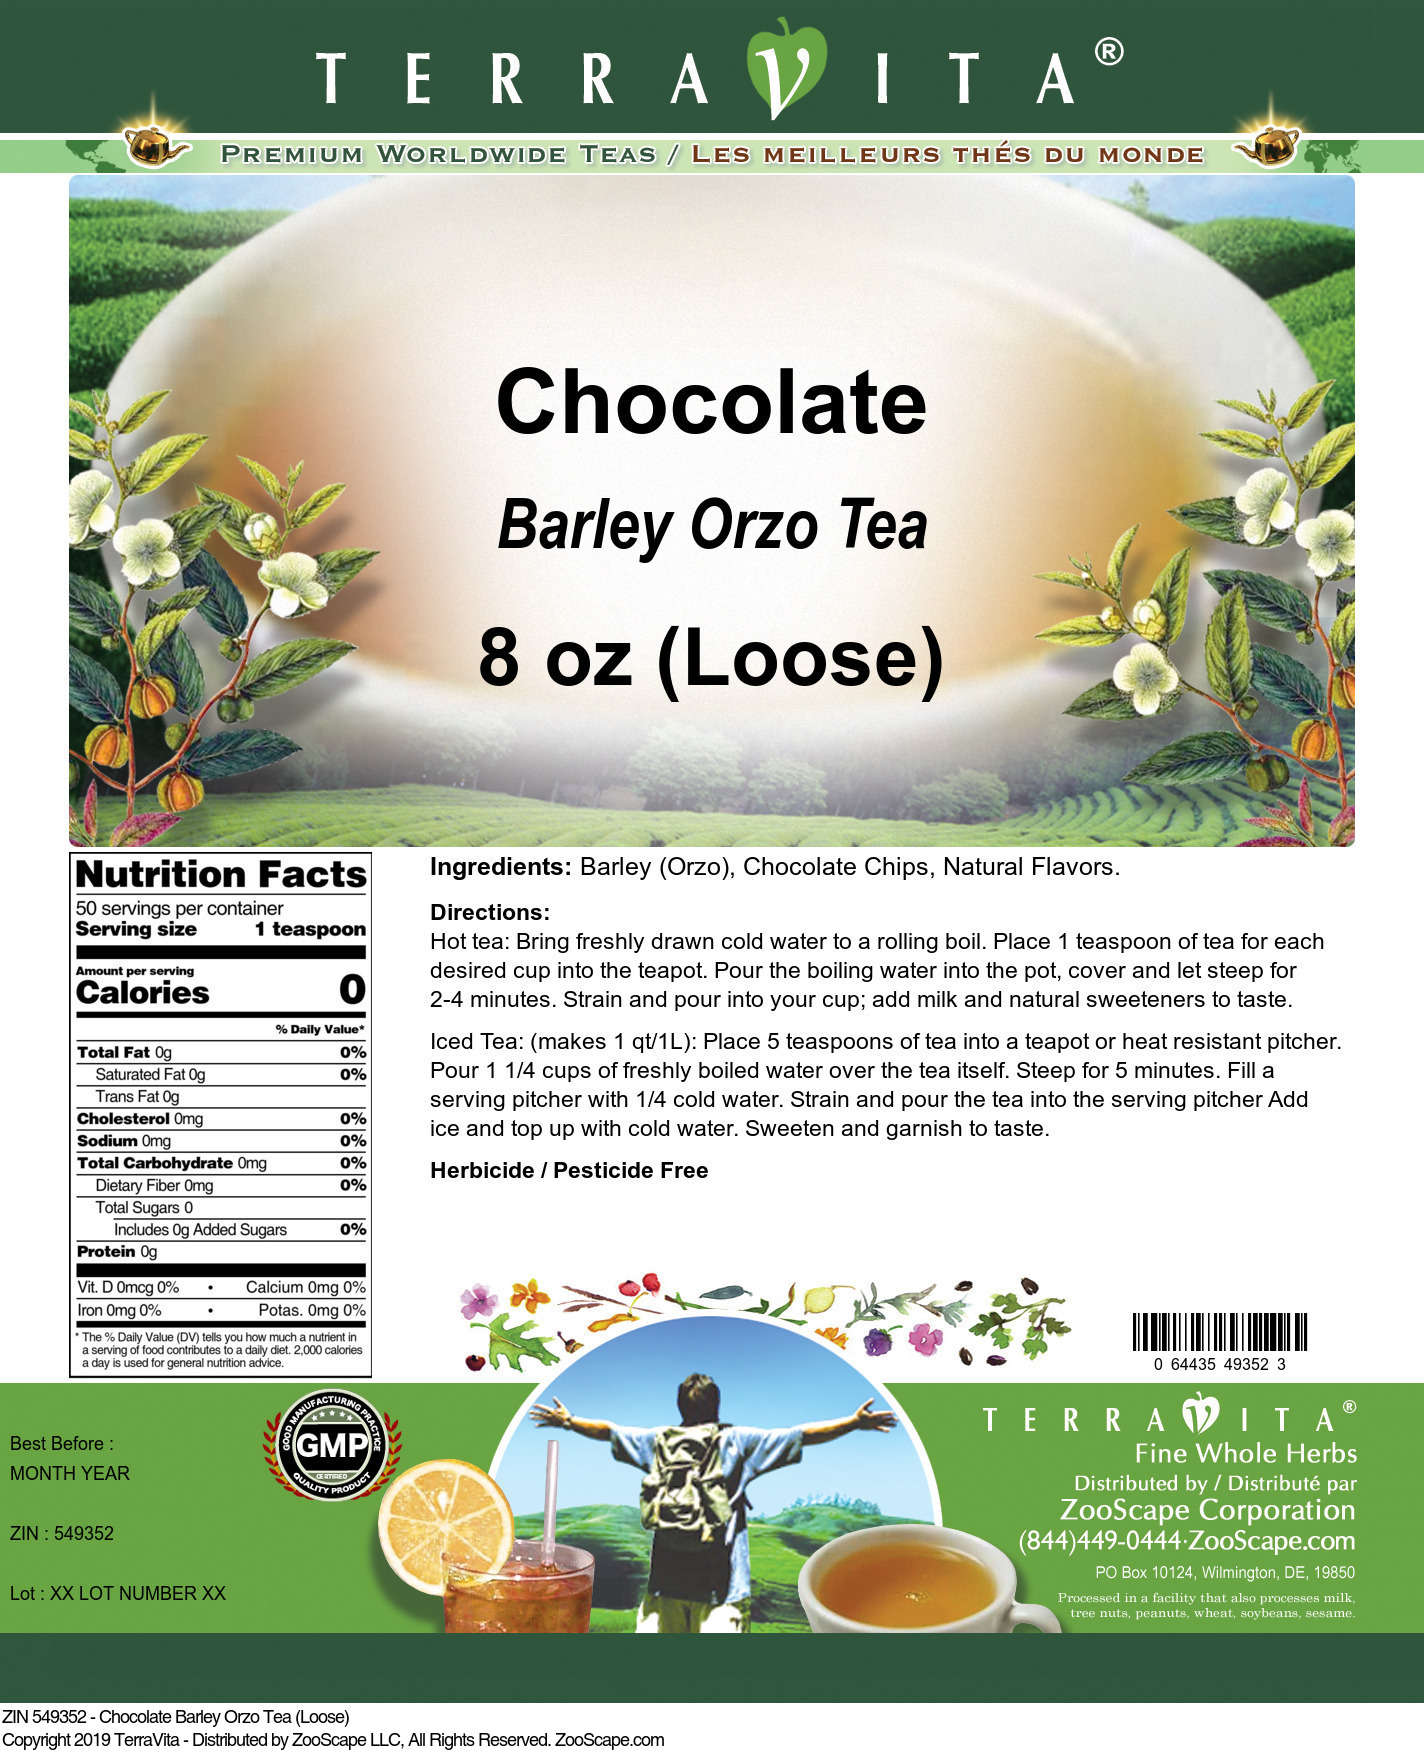 Chocolate Barley Orzo Tea (Loose) - Label